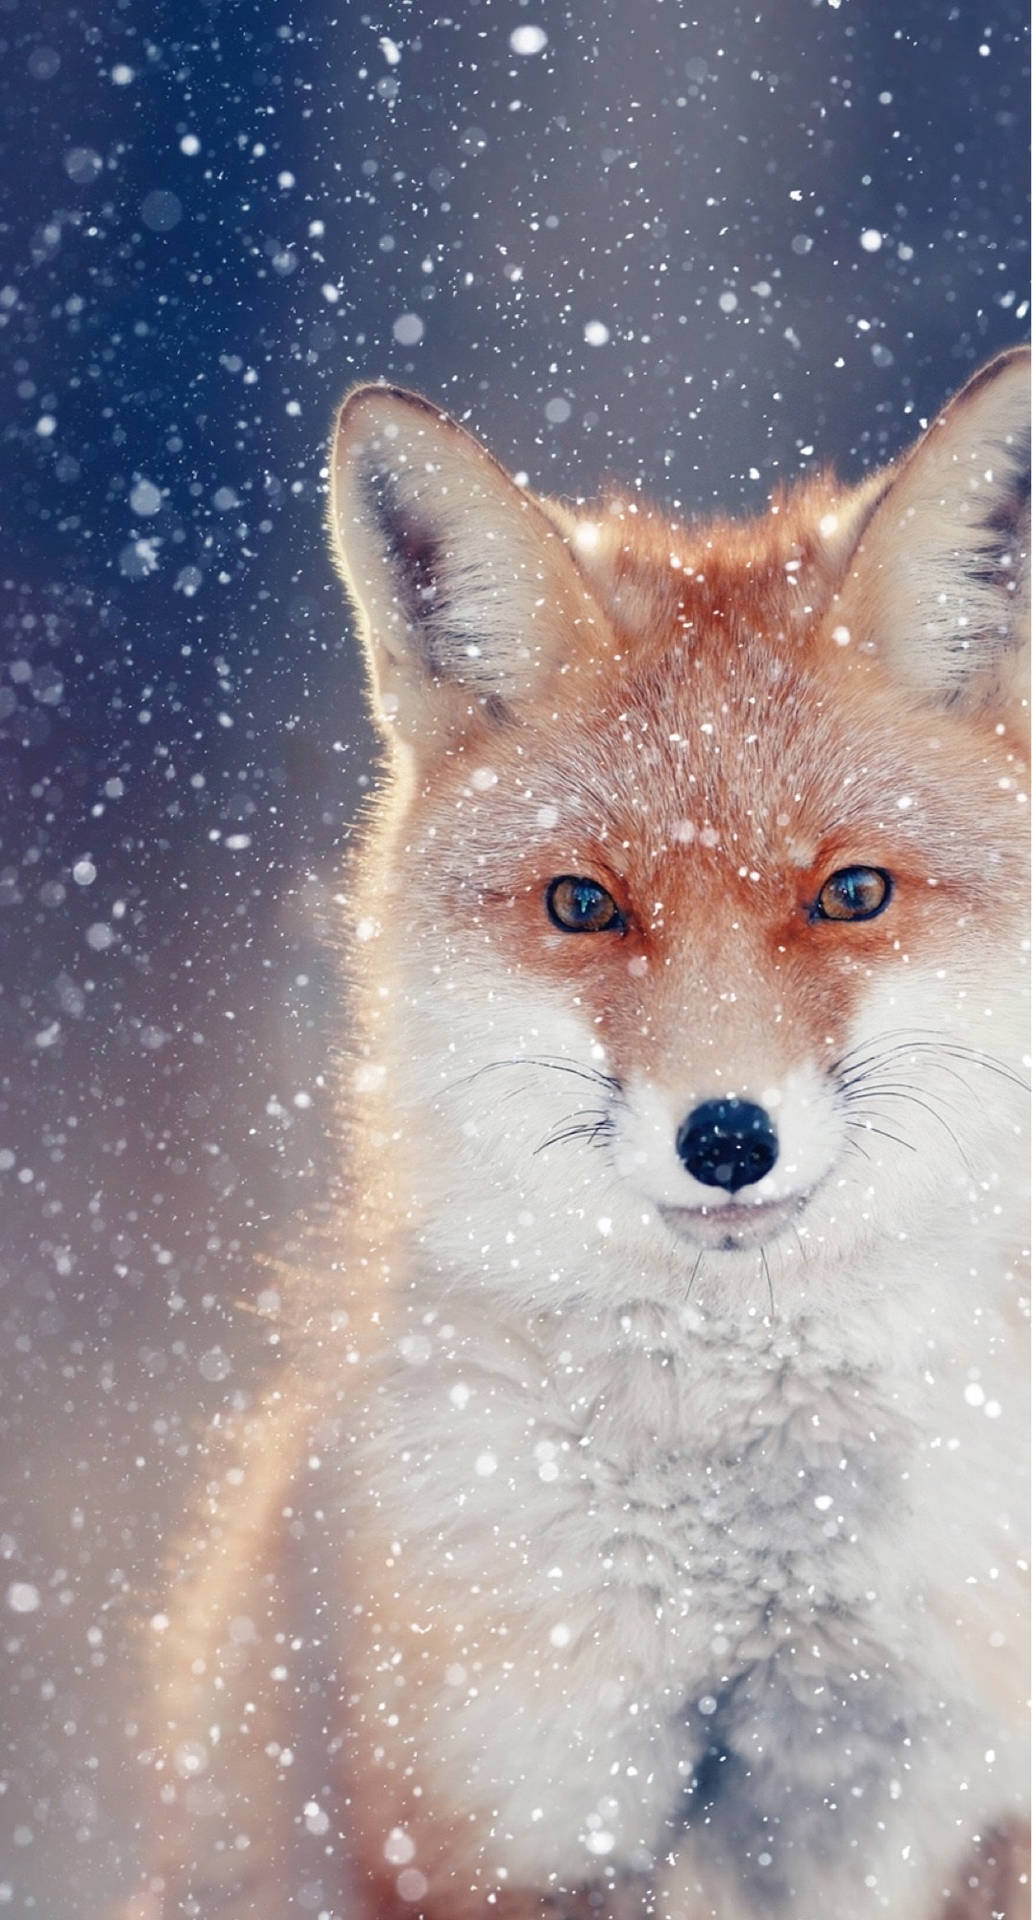 Free Cute Fox Wallpaper Downloads, Cute Fox Wallpaper for FREE